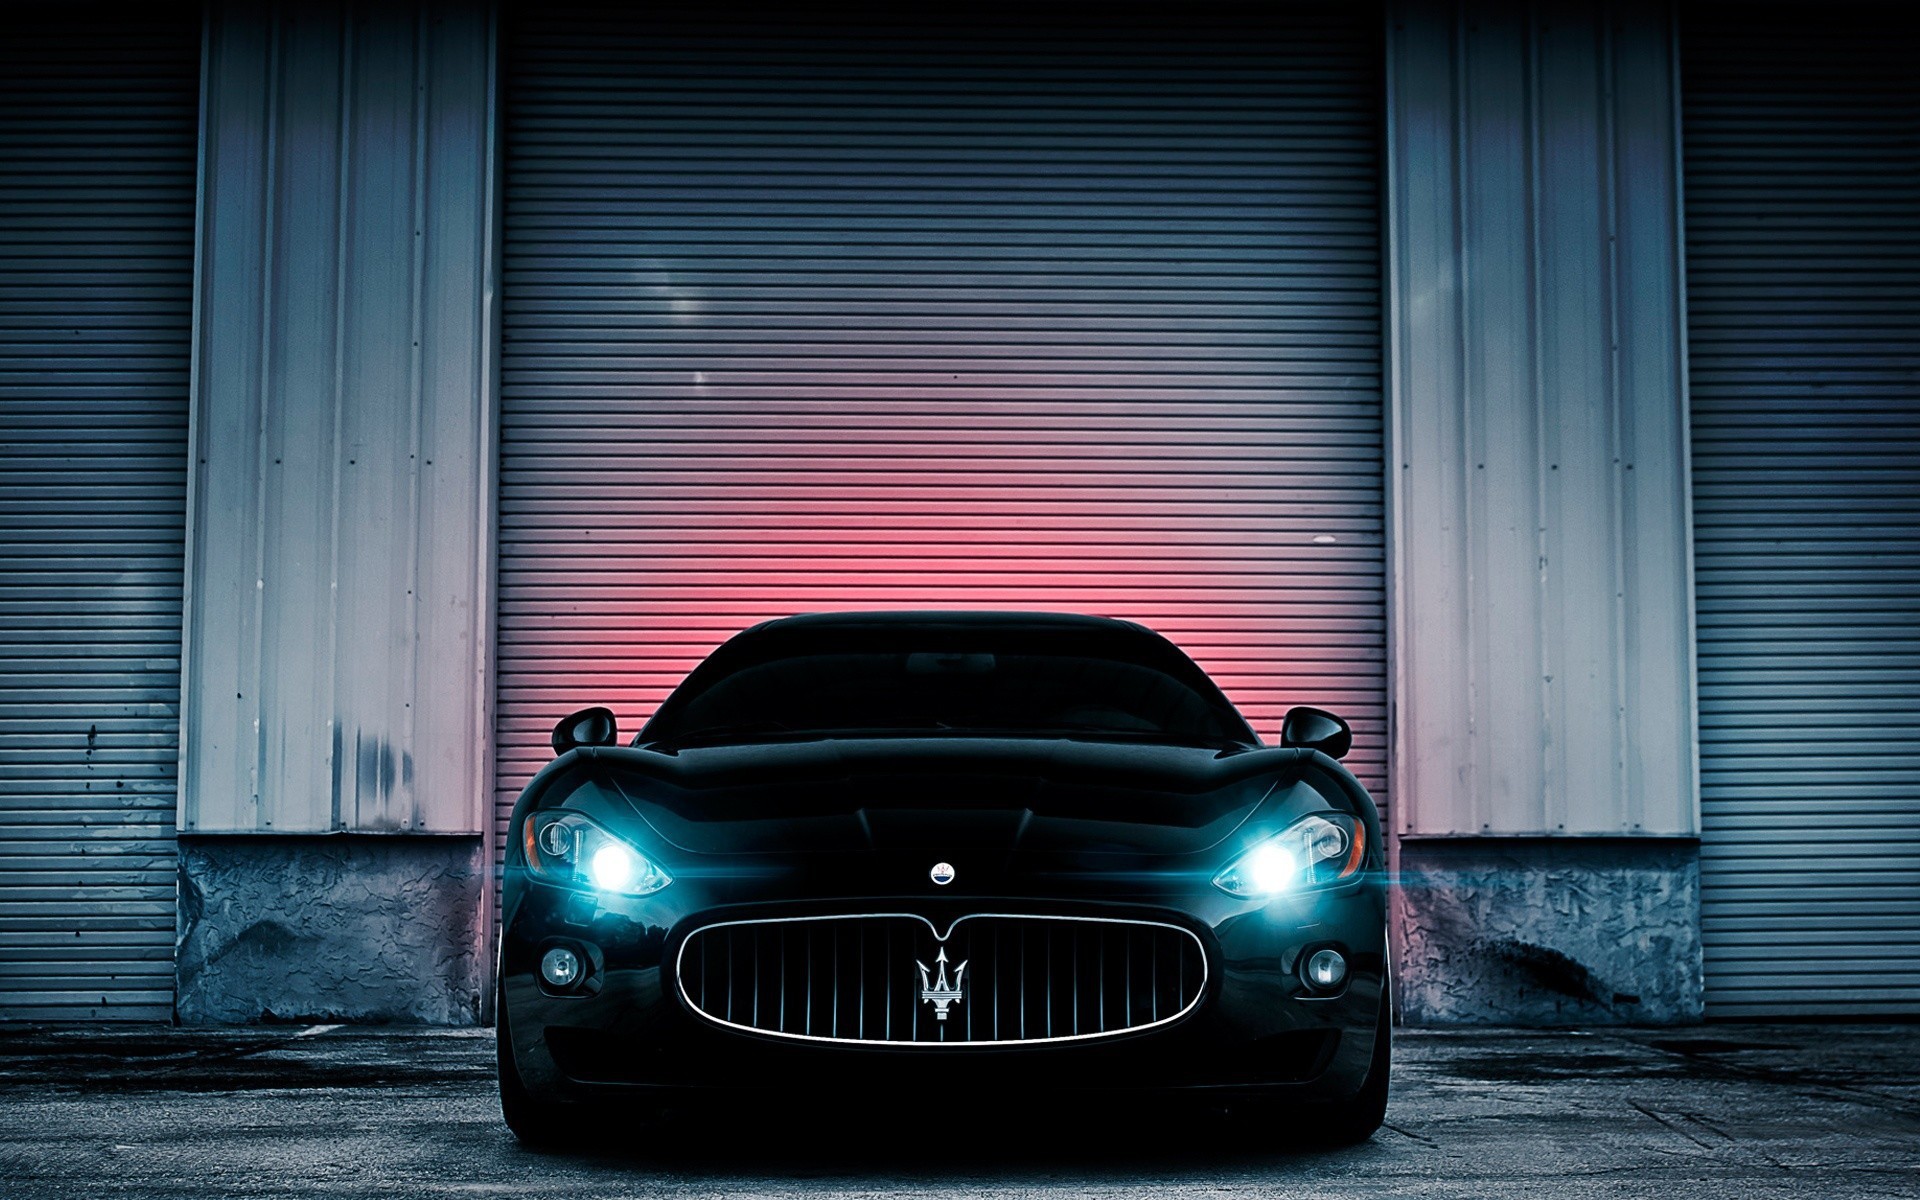 Neon lights black Maserati Desktop wallpapers 1024x600 1920x1200